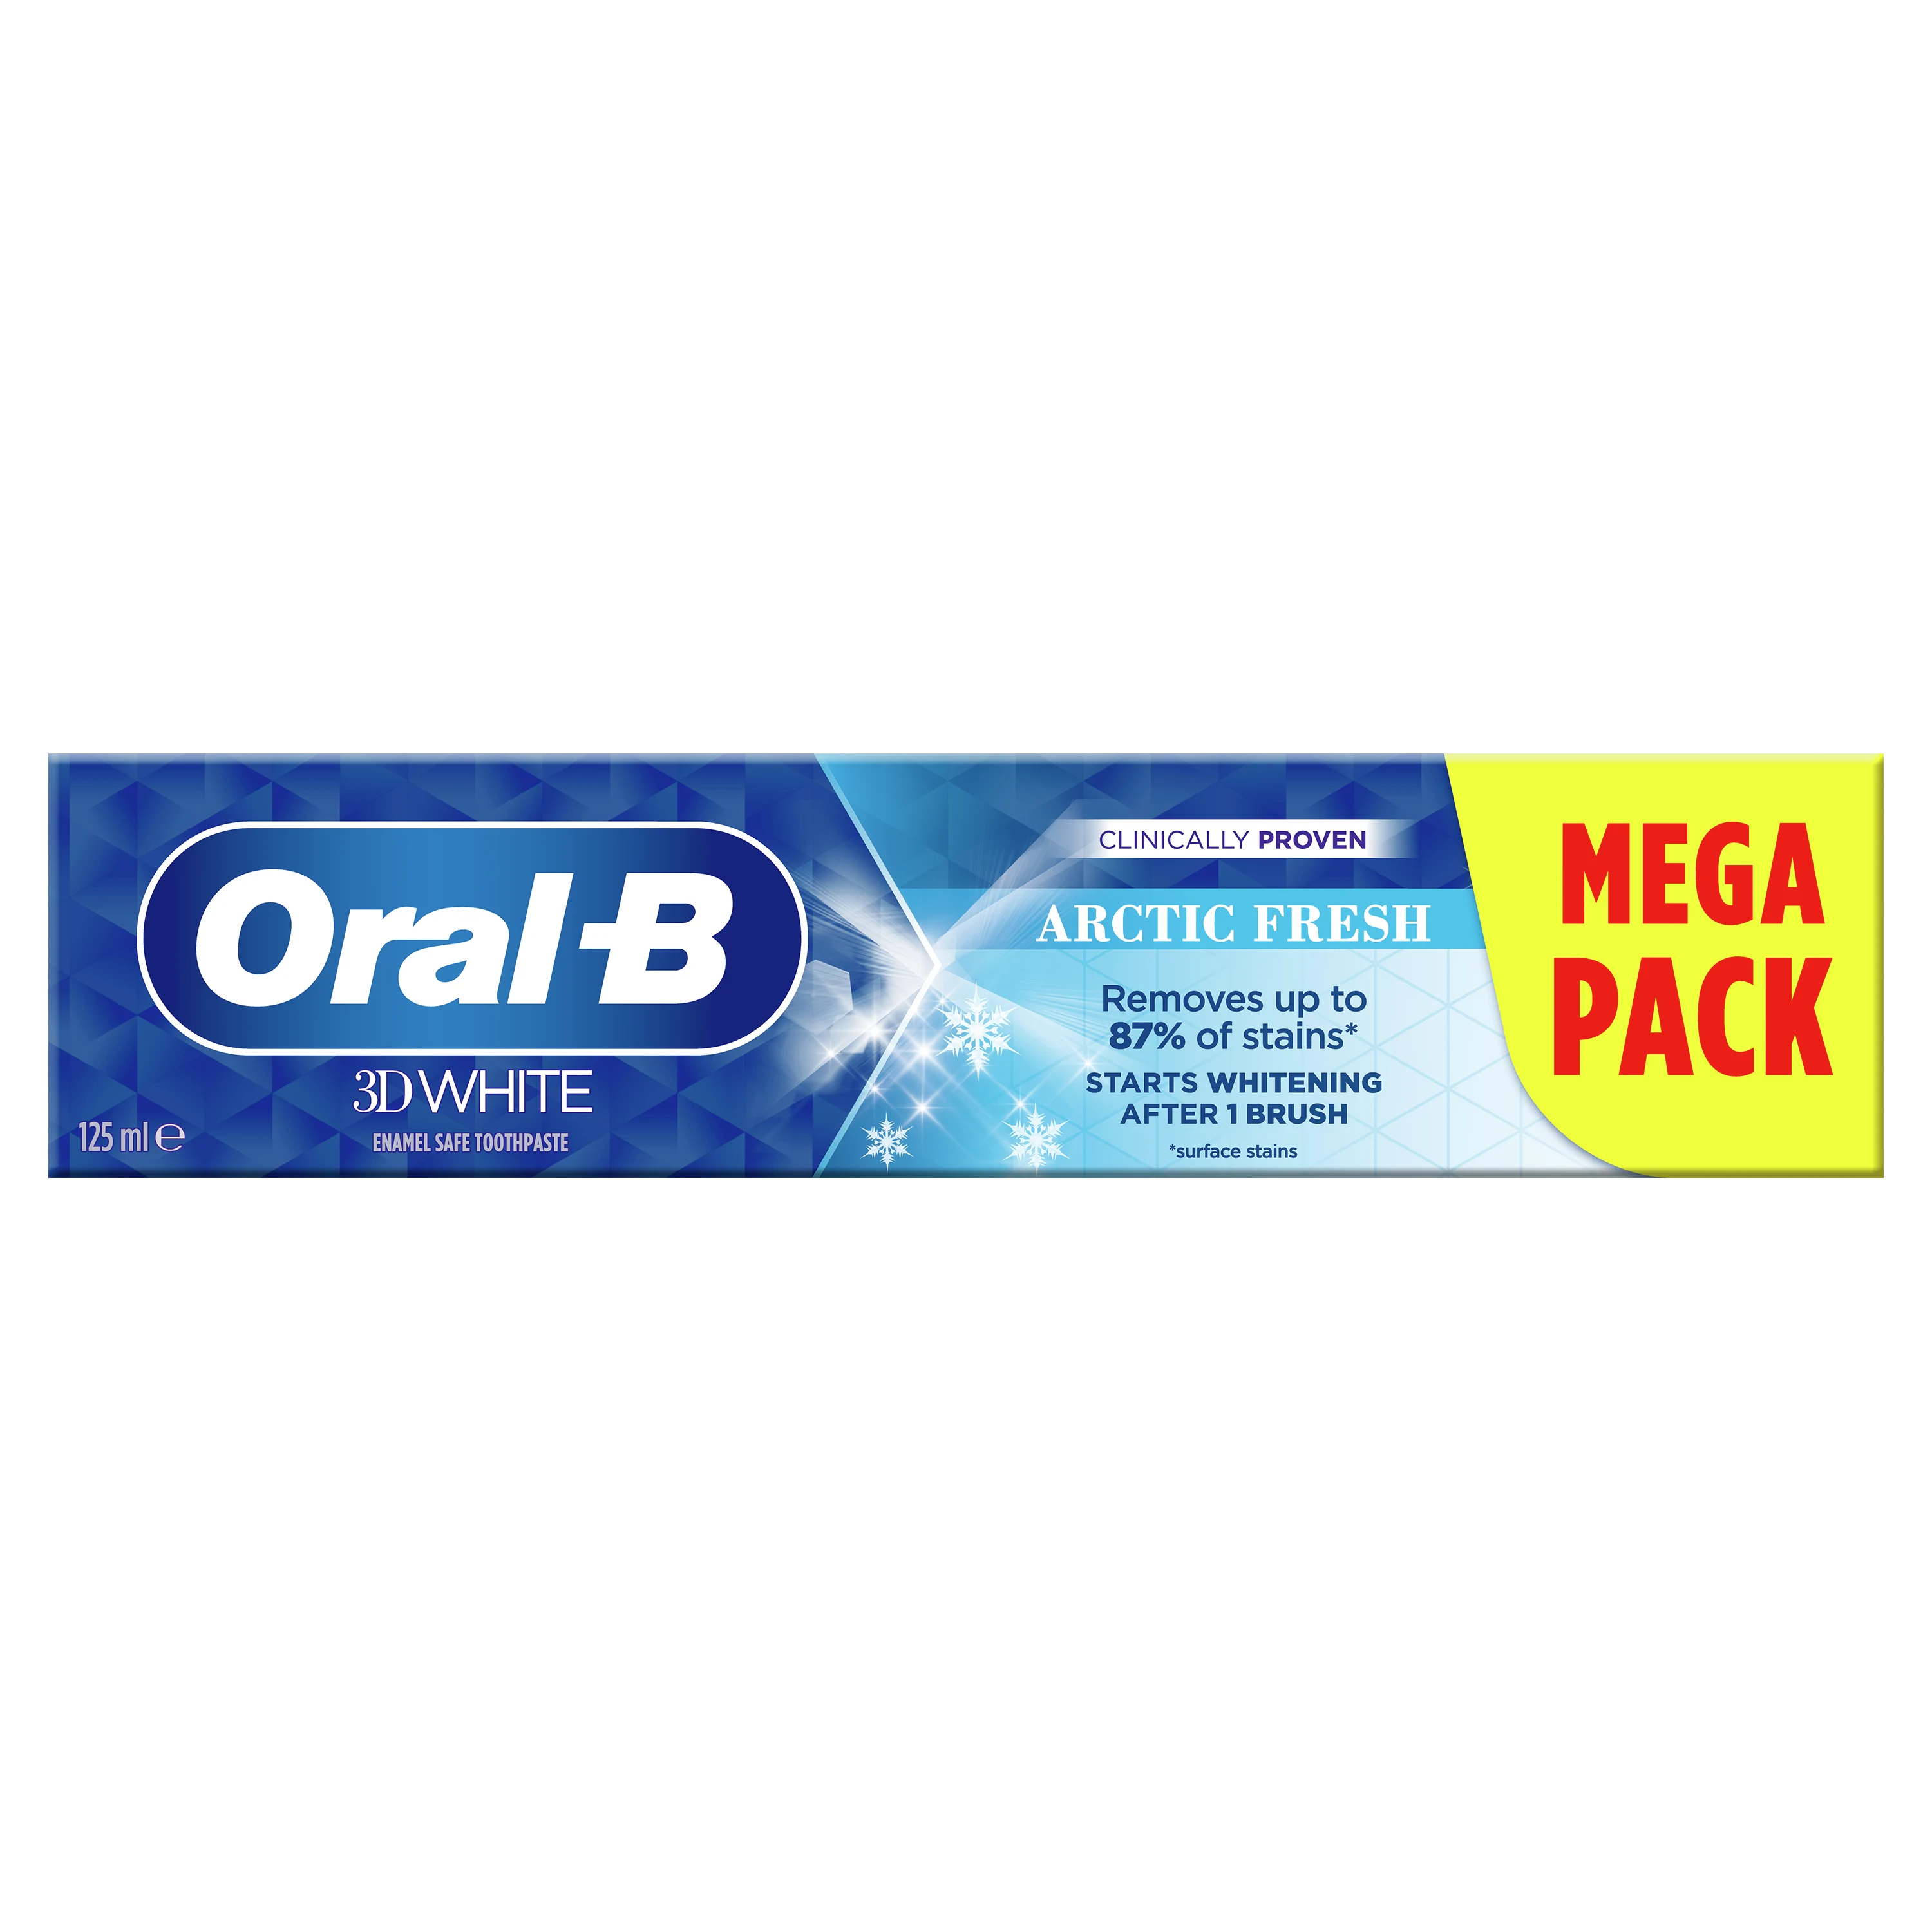 Oral-B 3D White Arctic Fresh Toothpaste Toothpaste 125ml, Mega Pack 